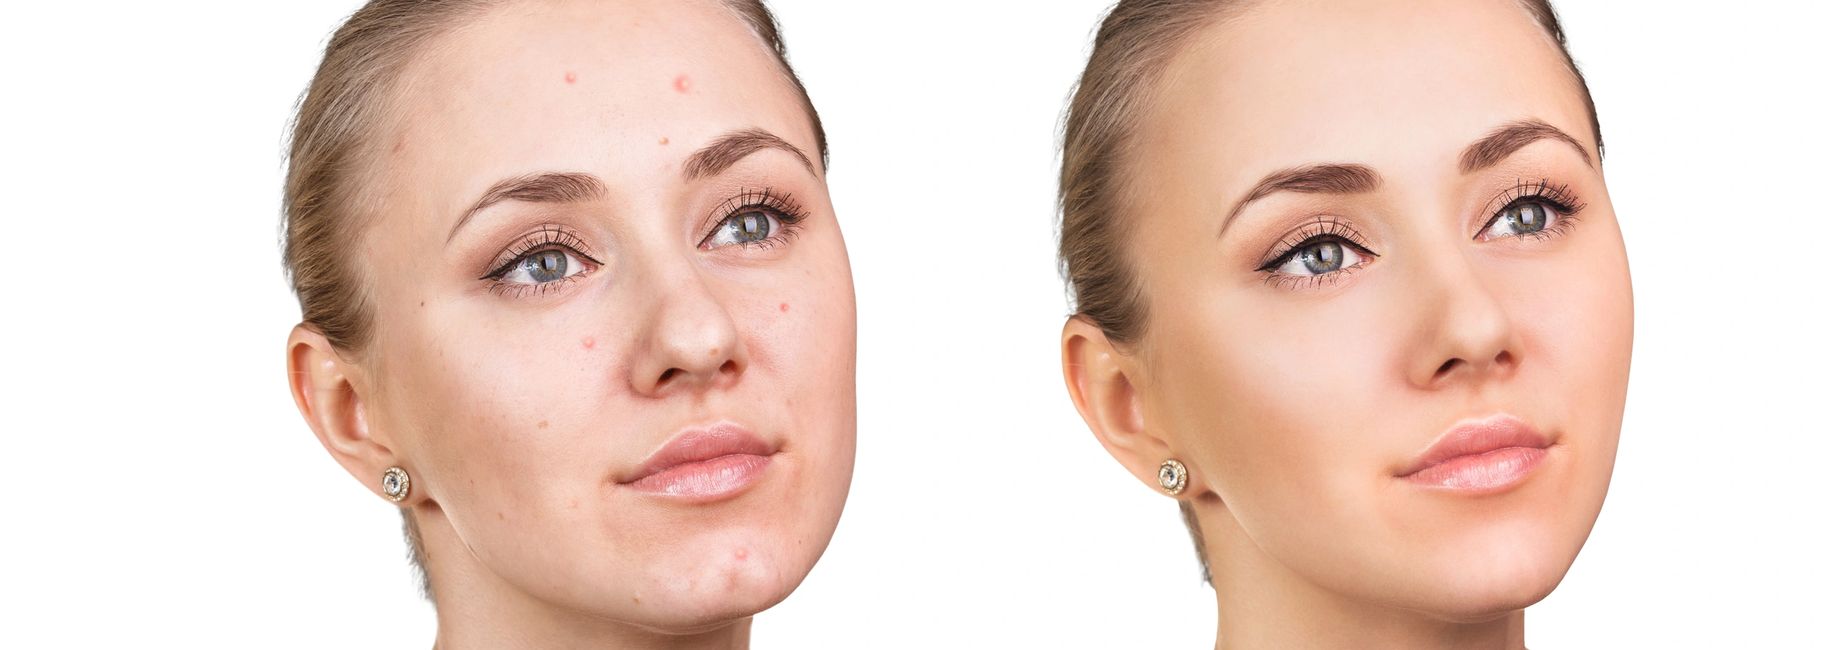 Acne Acne Scar Therapy Faceline Aesthetics